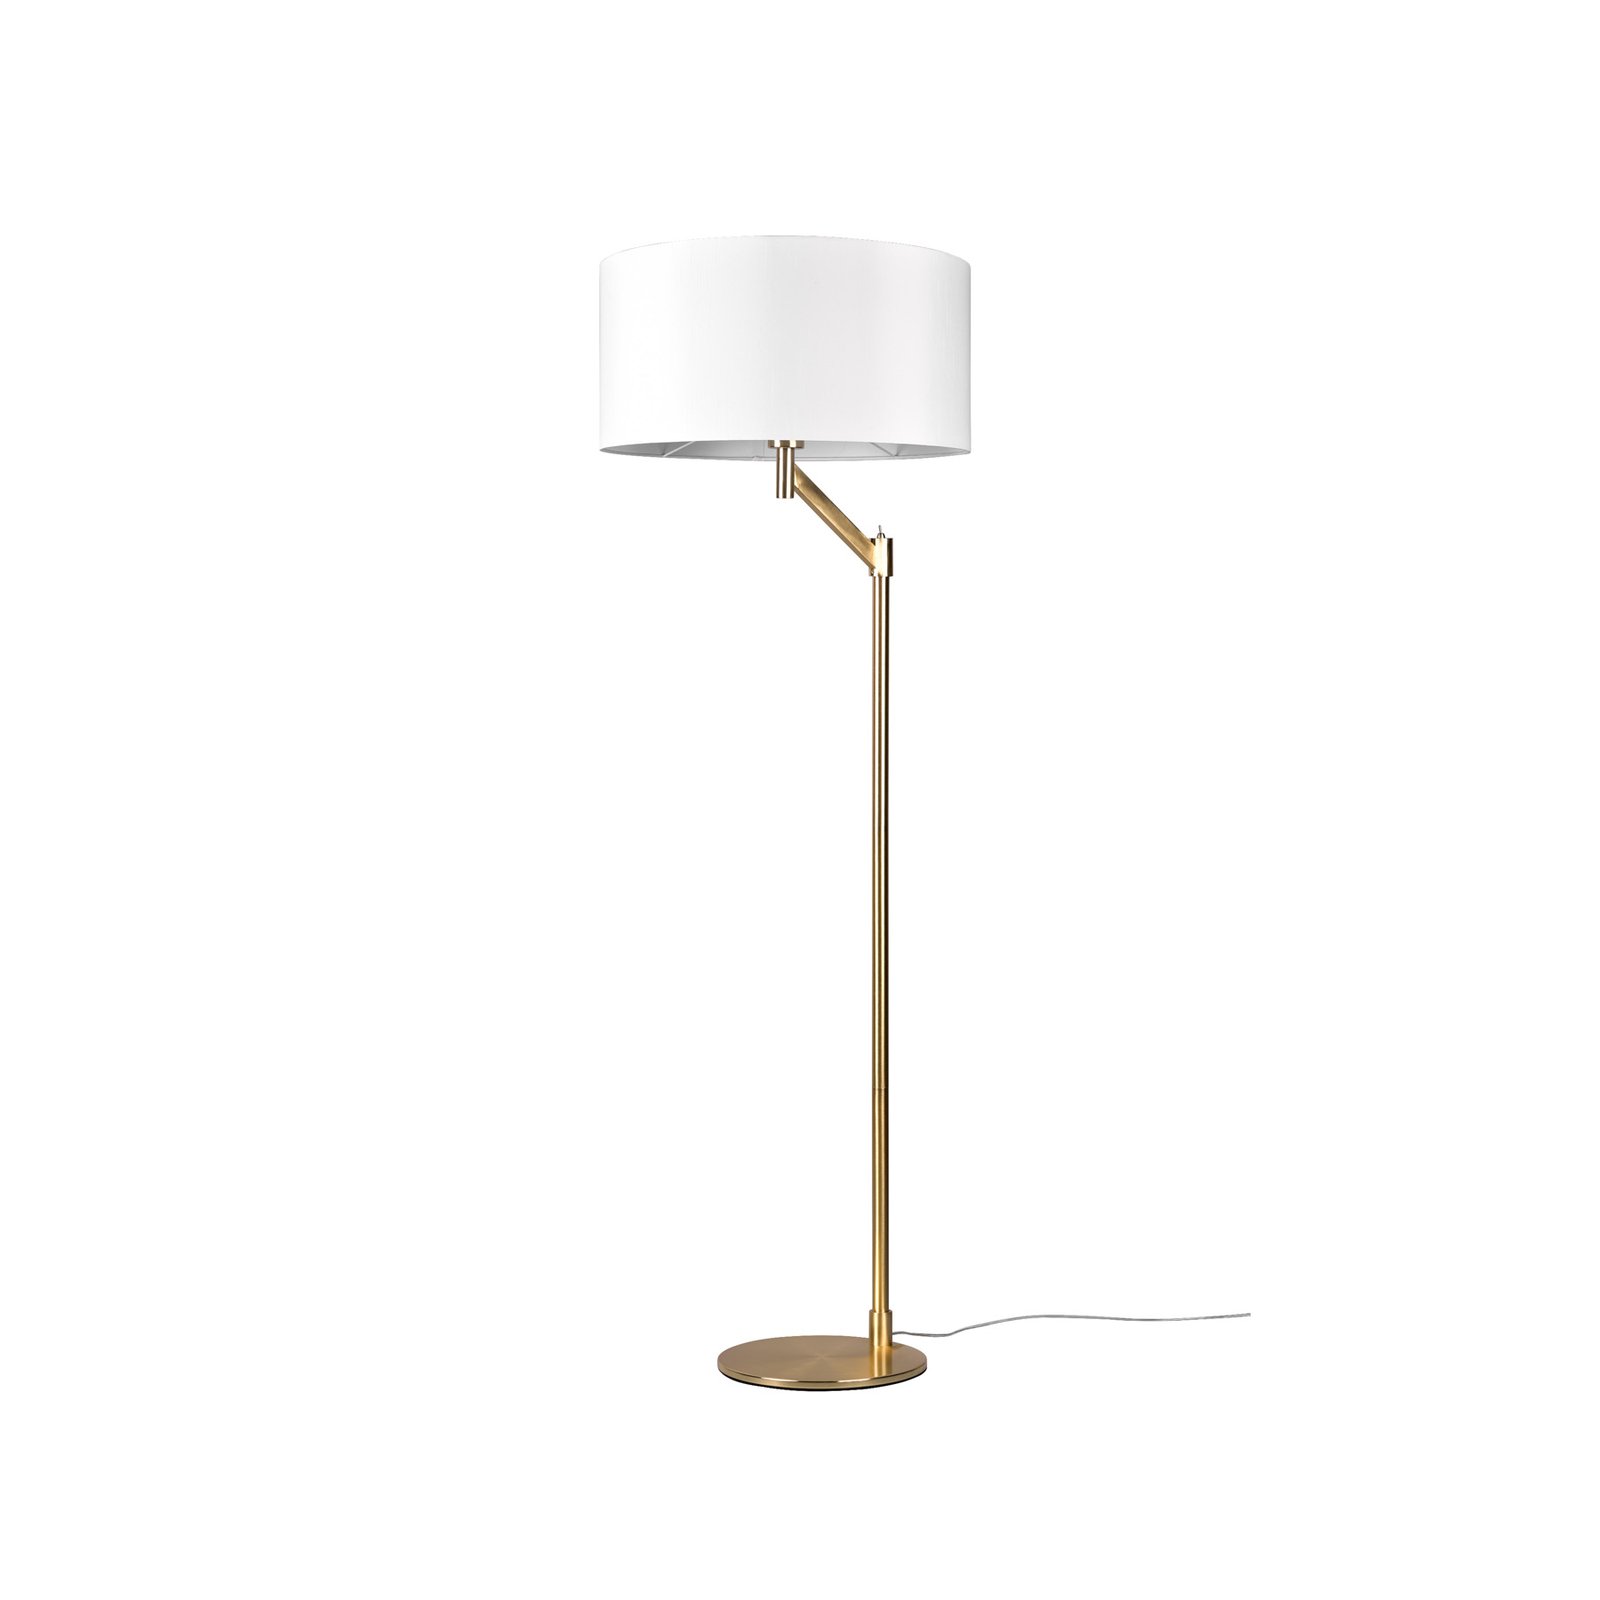 Cassio floor lamp with fabric shade, brass